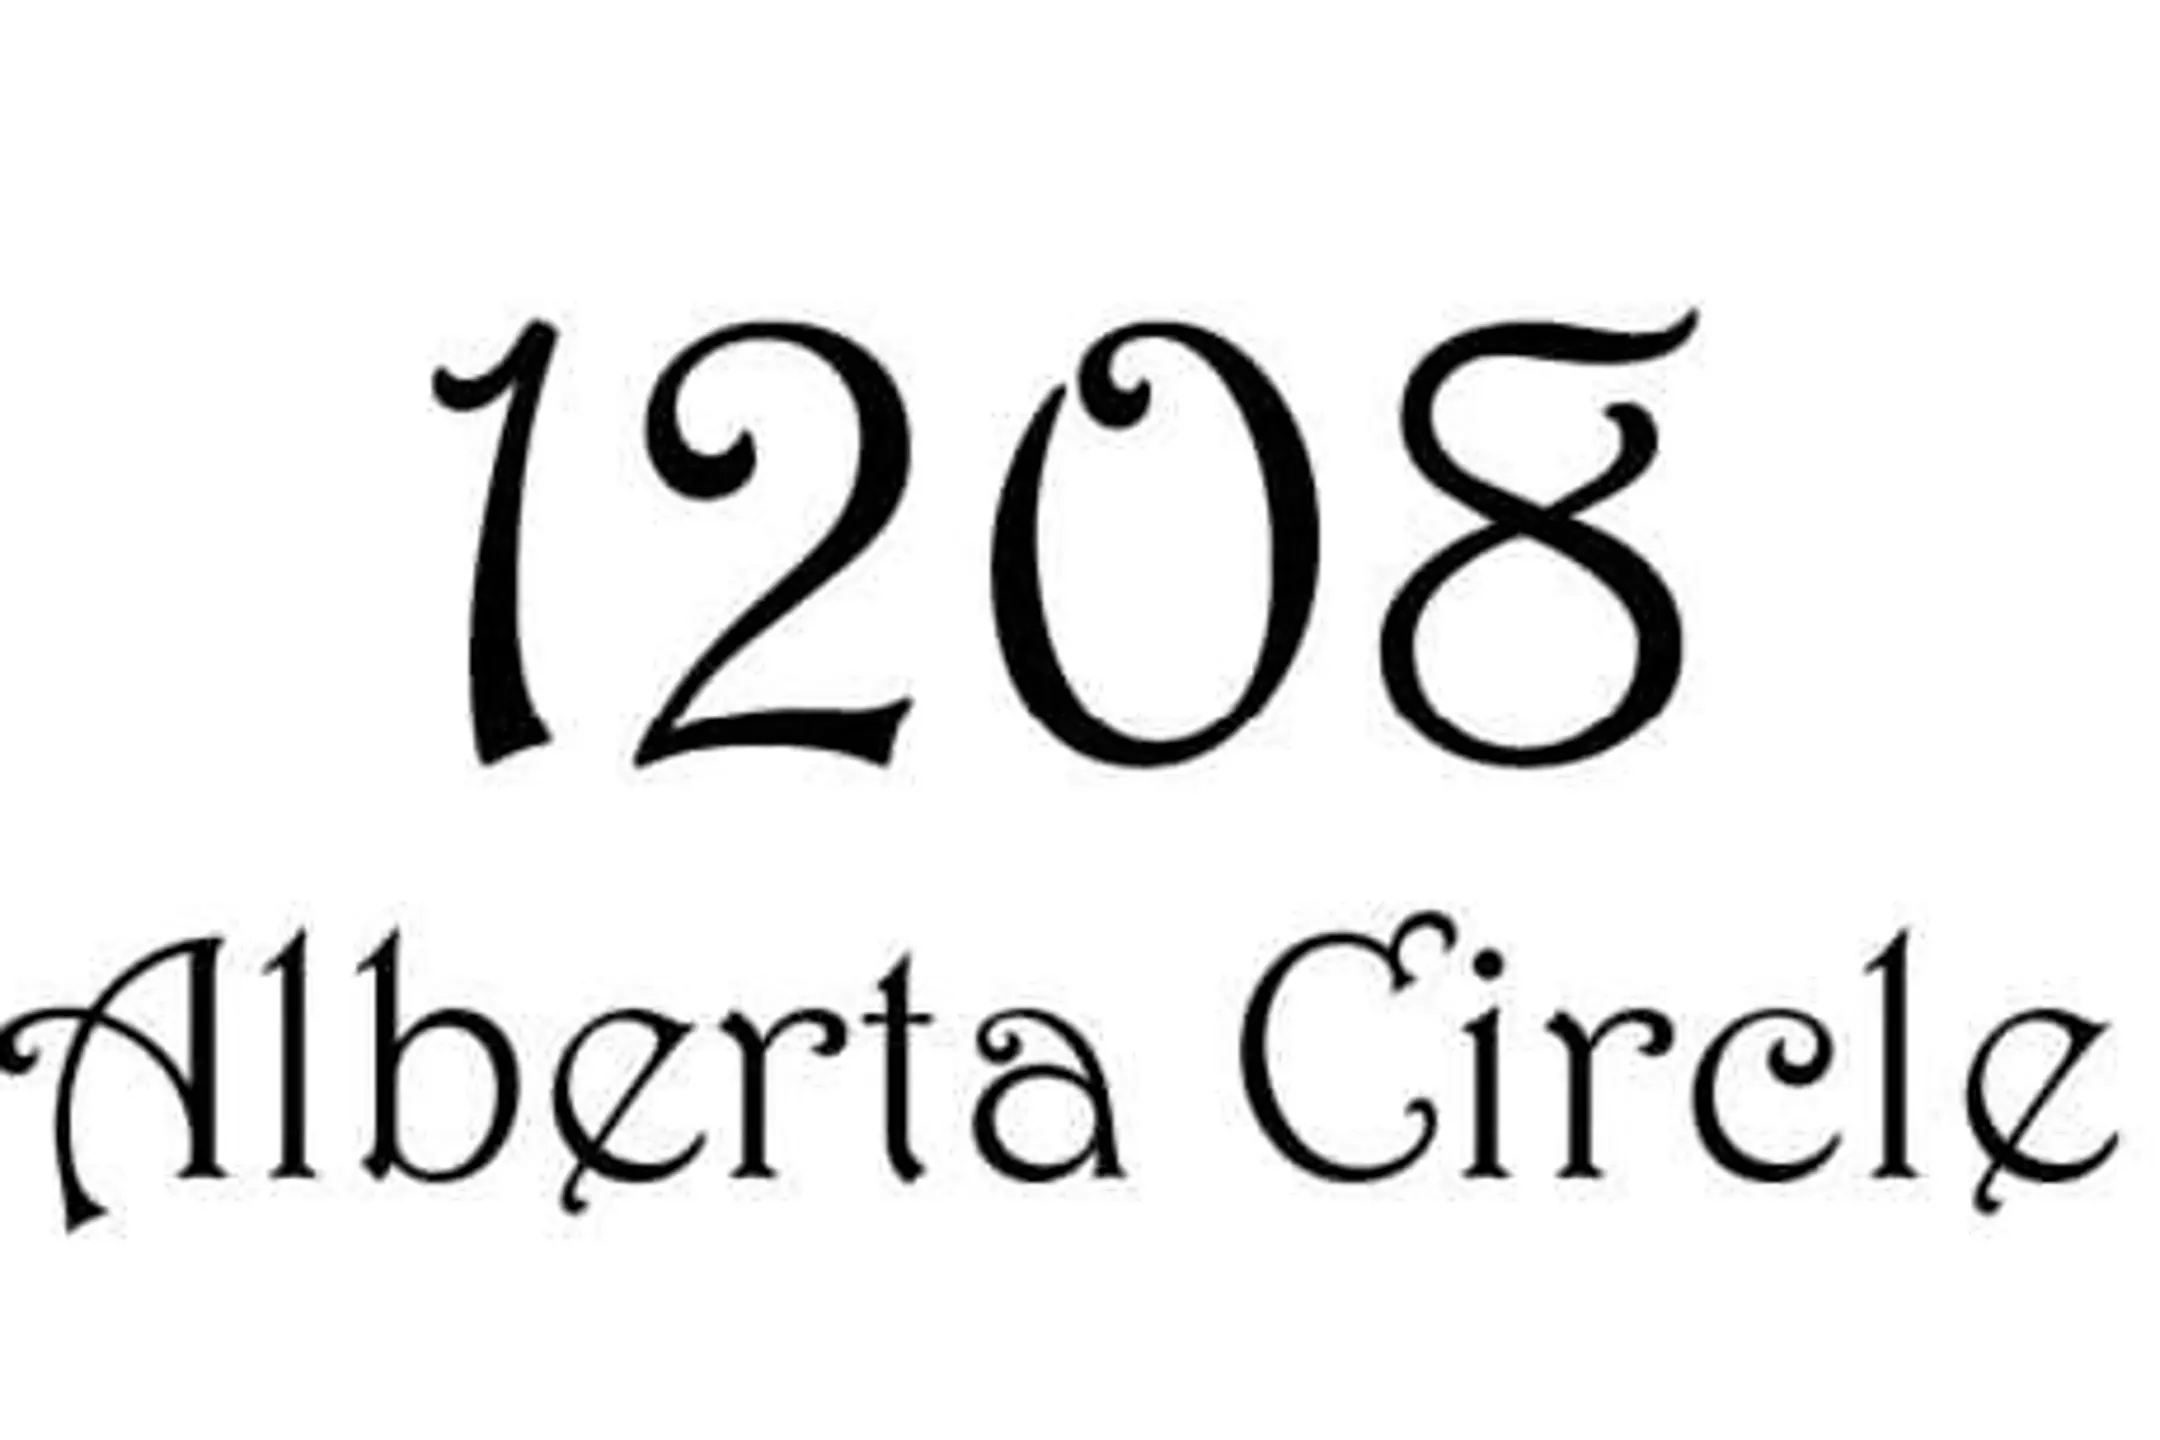 1208 Alberta Circle - Park Hills, KY